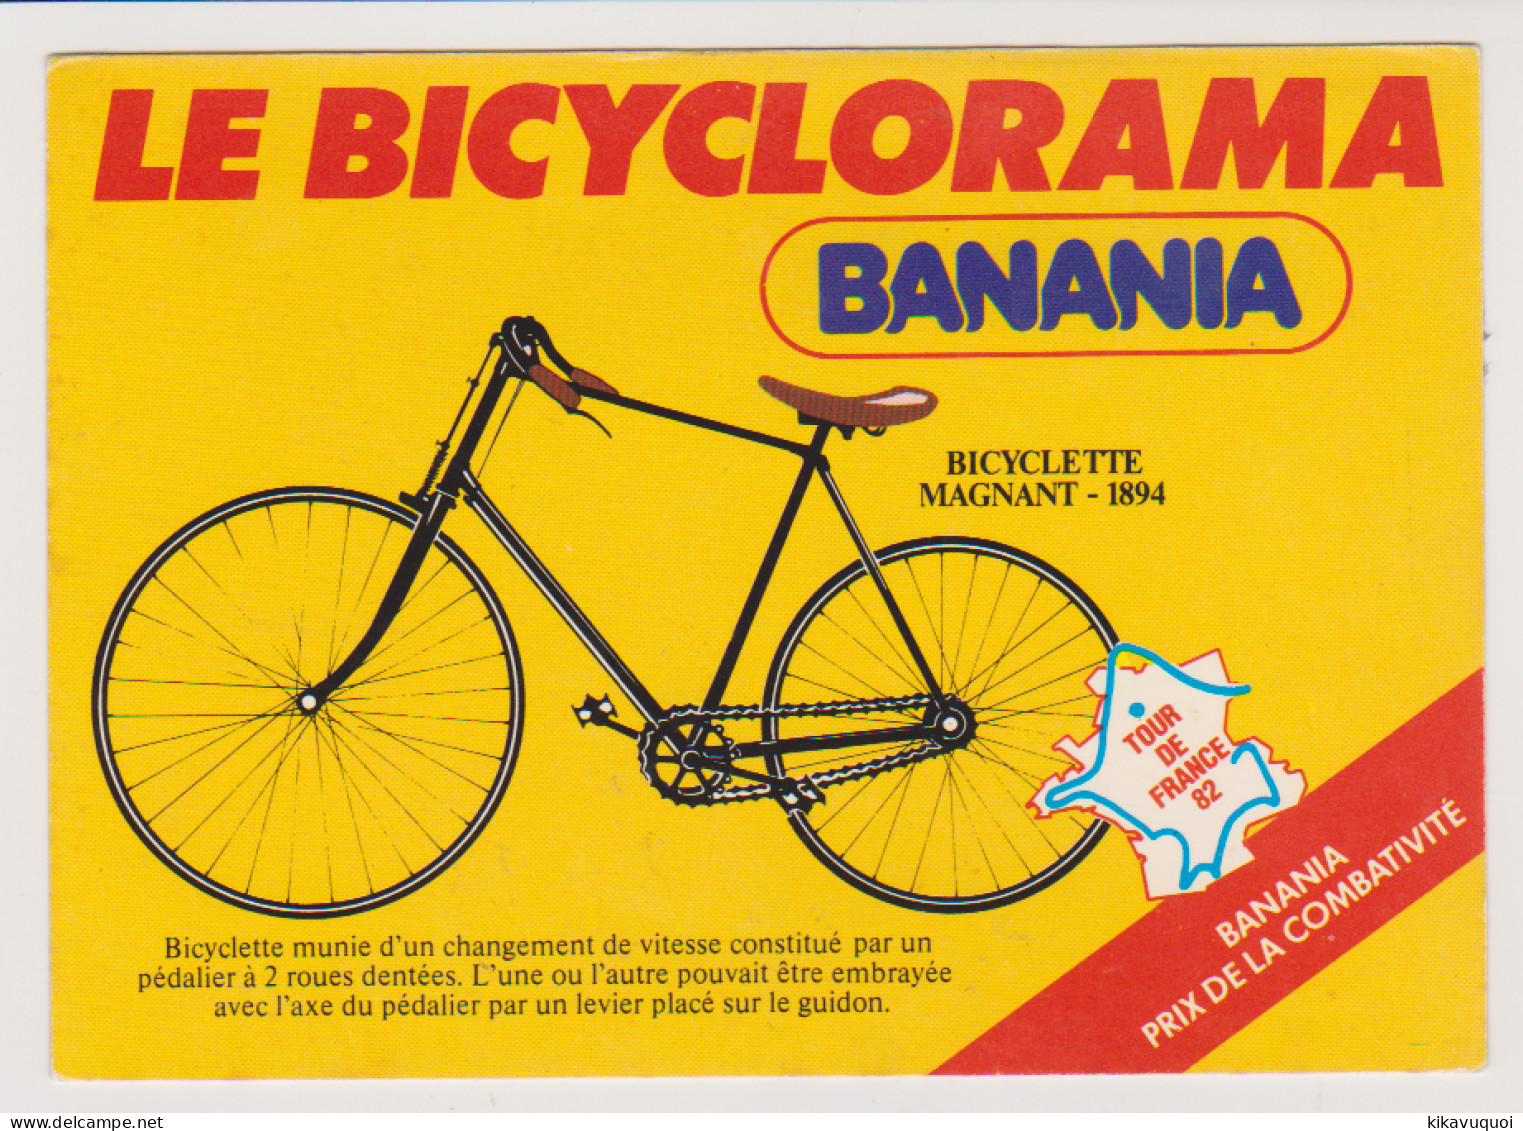 BANANIA - TOUR DE FRANCE 1982 - LE BICYCLORAMA - VELO - CYCLE - CARTE POSTALE ANCIENNE - Moto